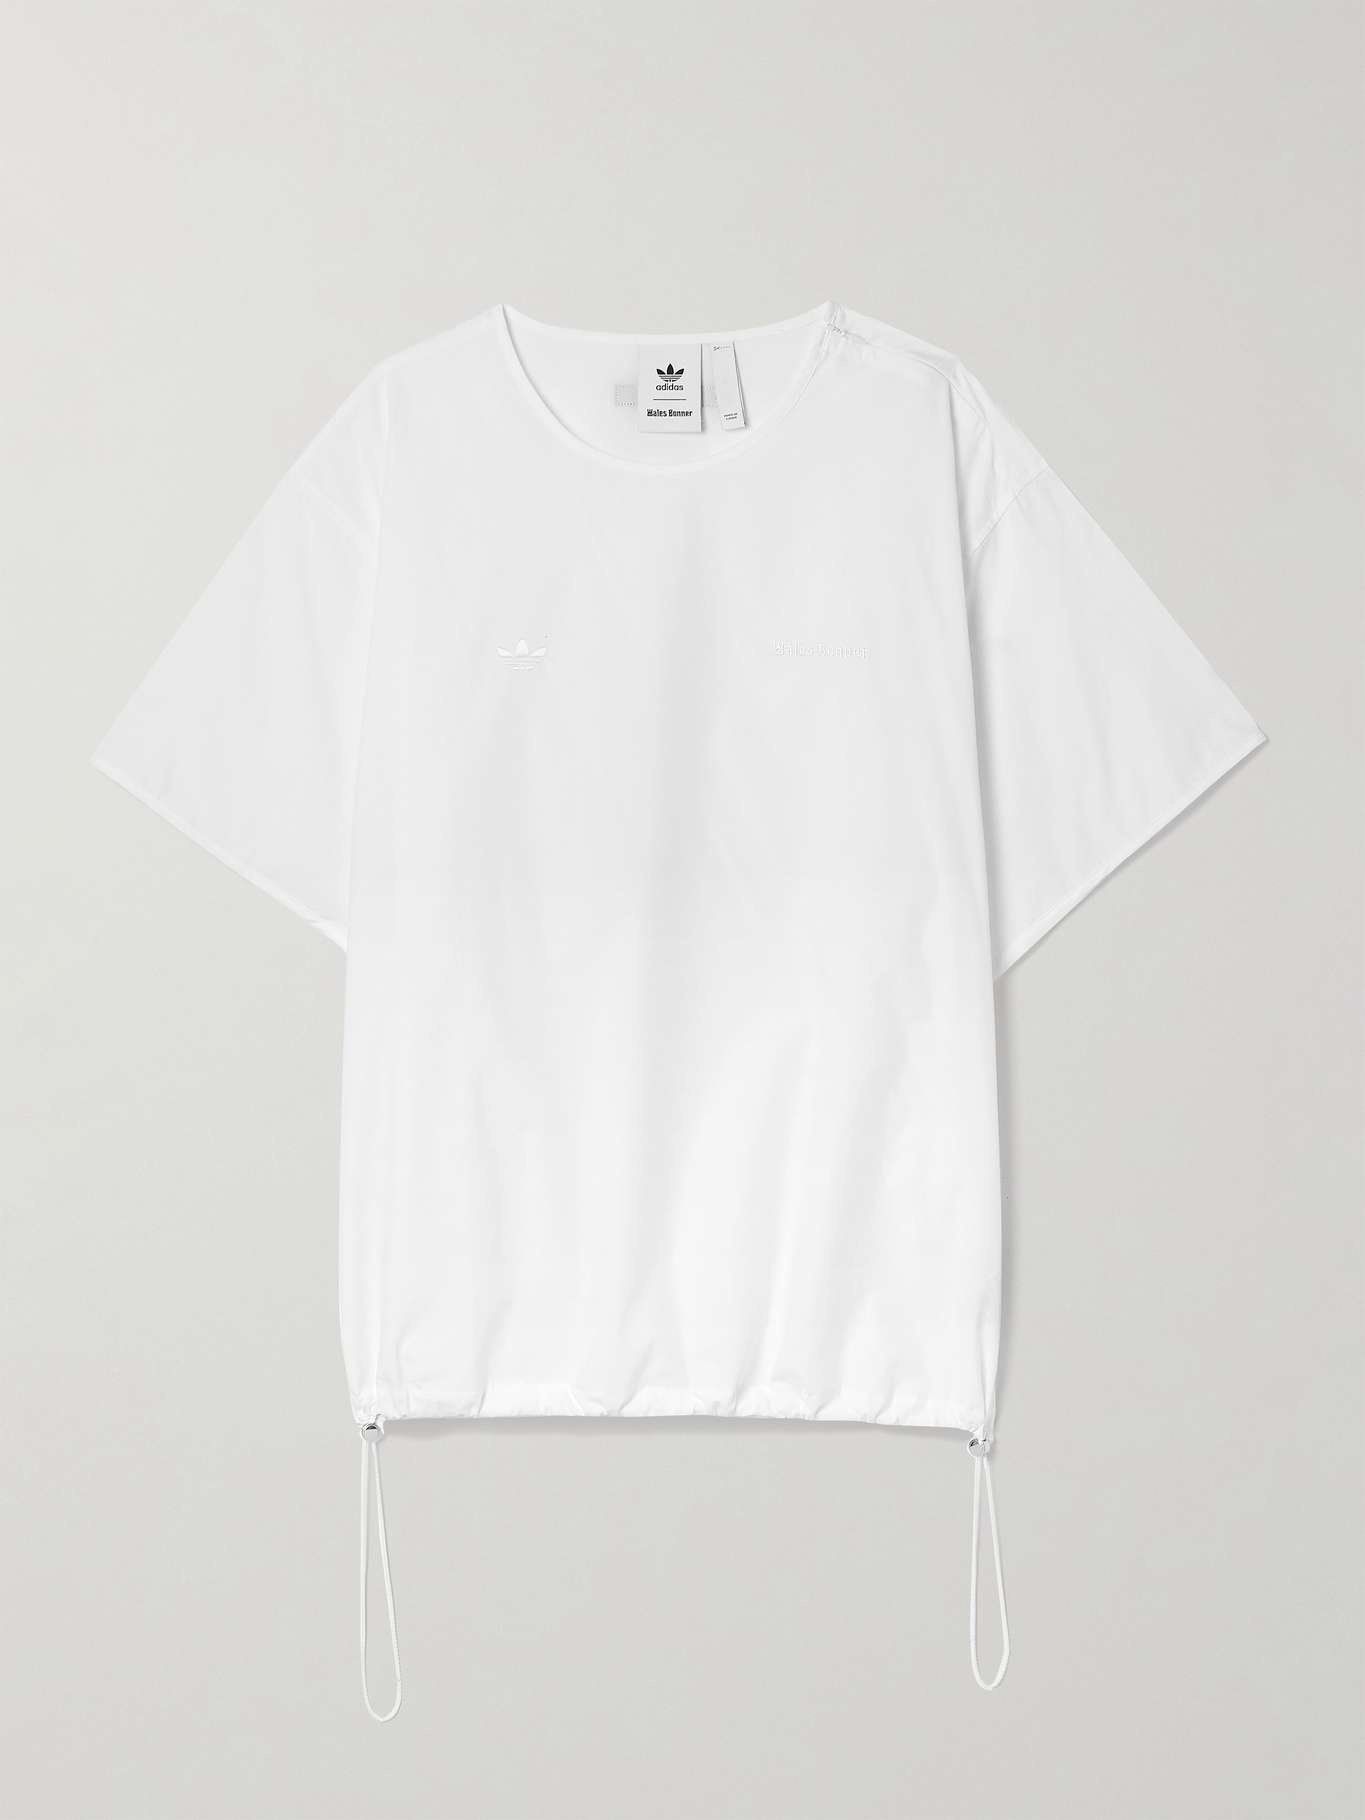 + Wales Bonner embroidered cotton-poplin T-shirt - 1